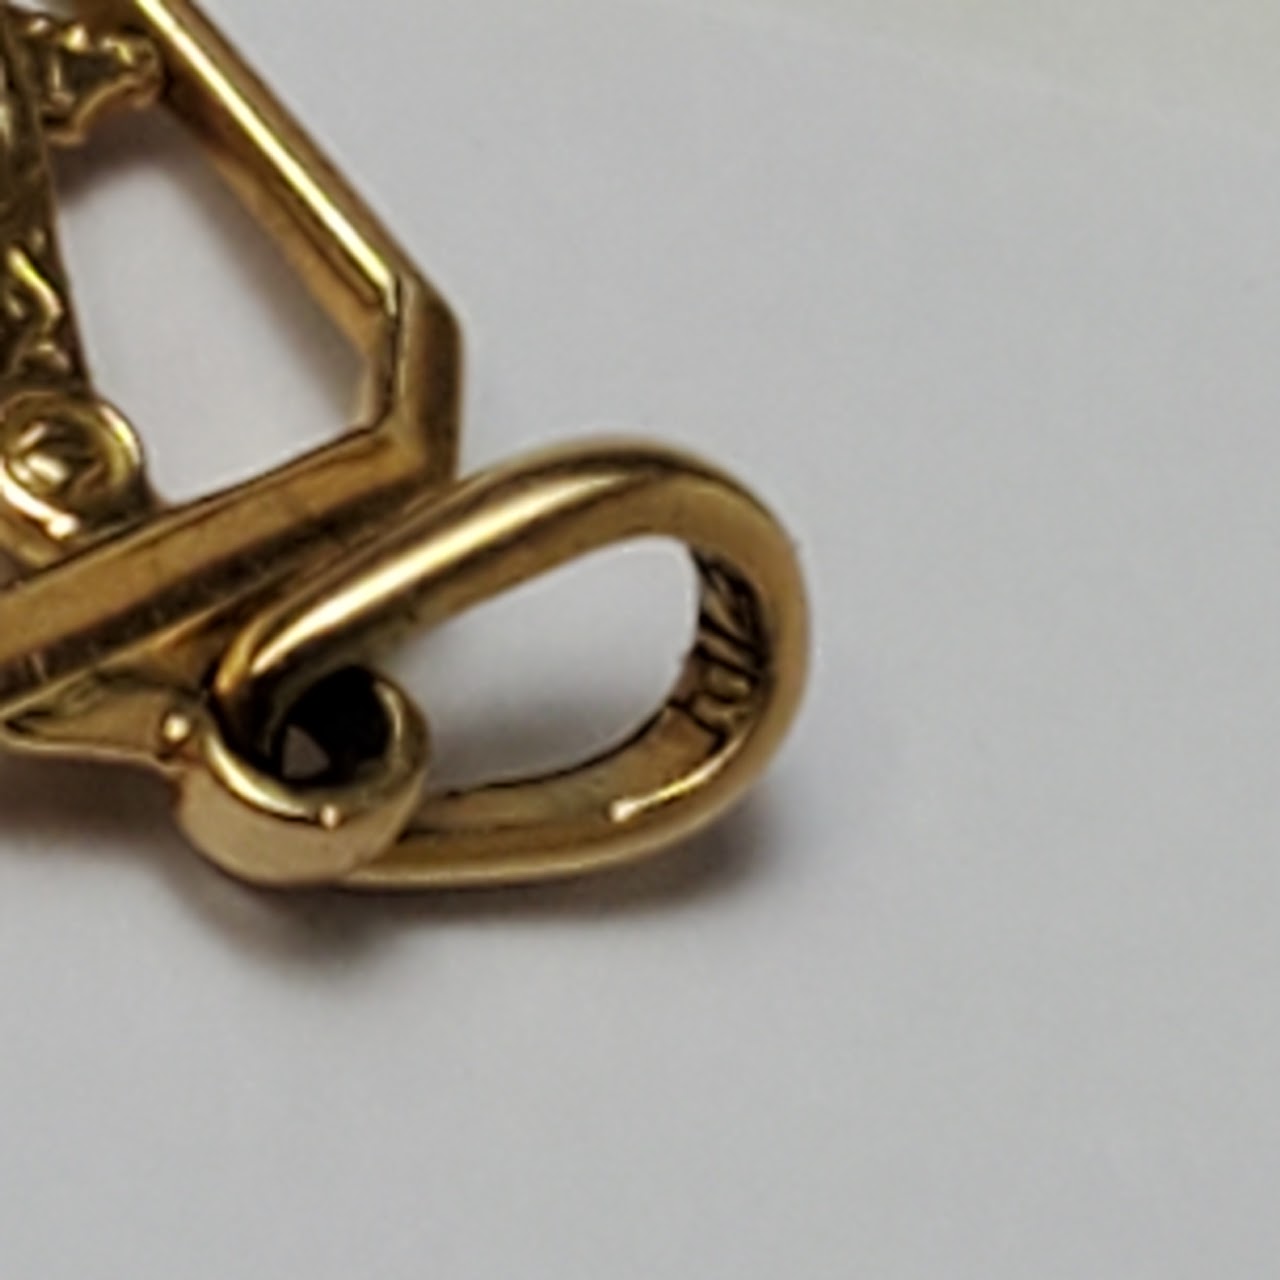 14K Gold Masonic Charm